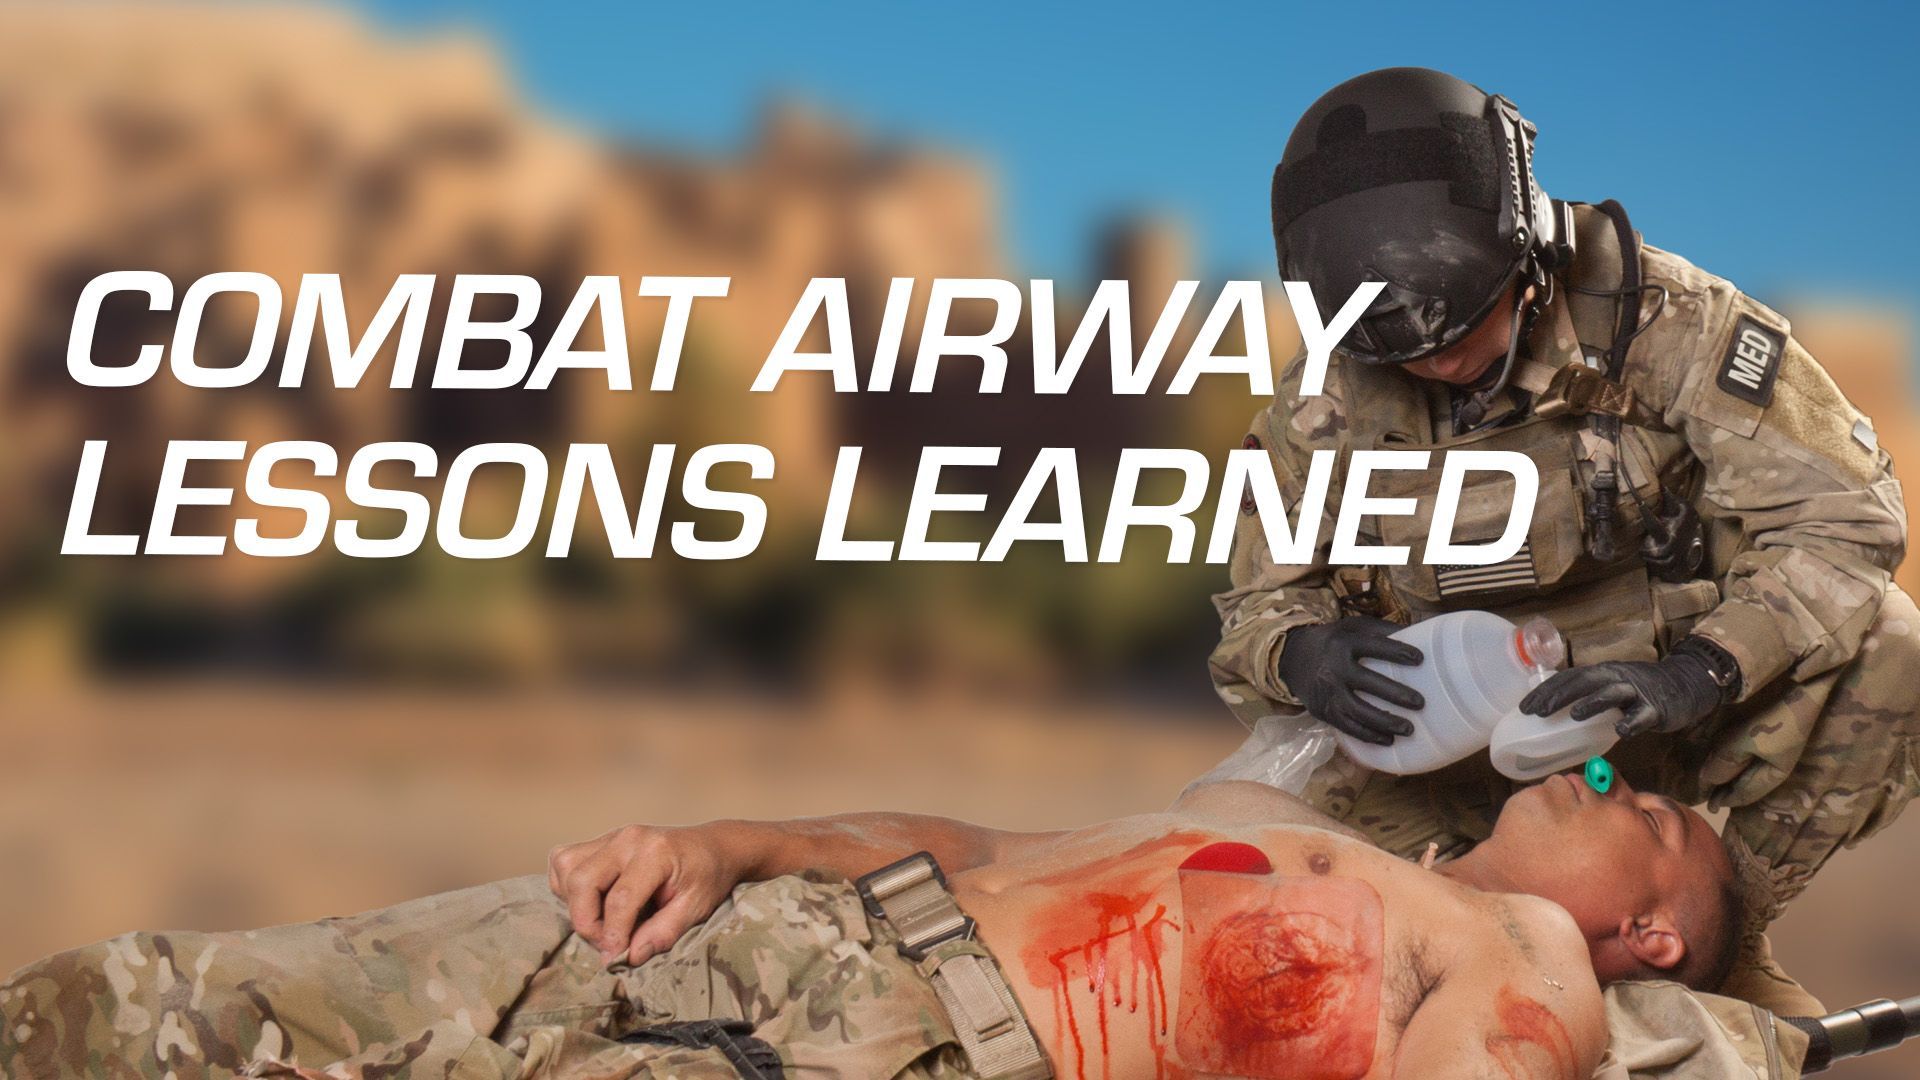 Airway Series 1 - Combat Airway Lessons Learned